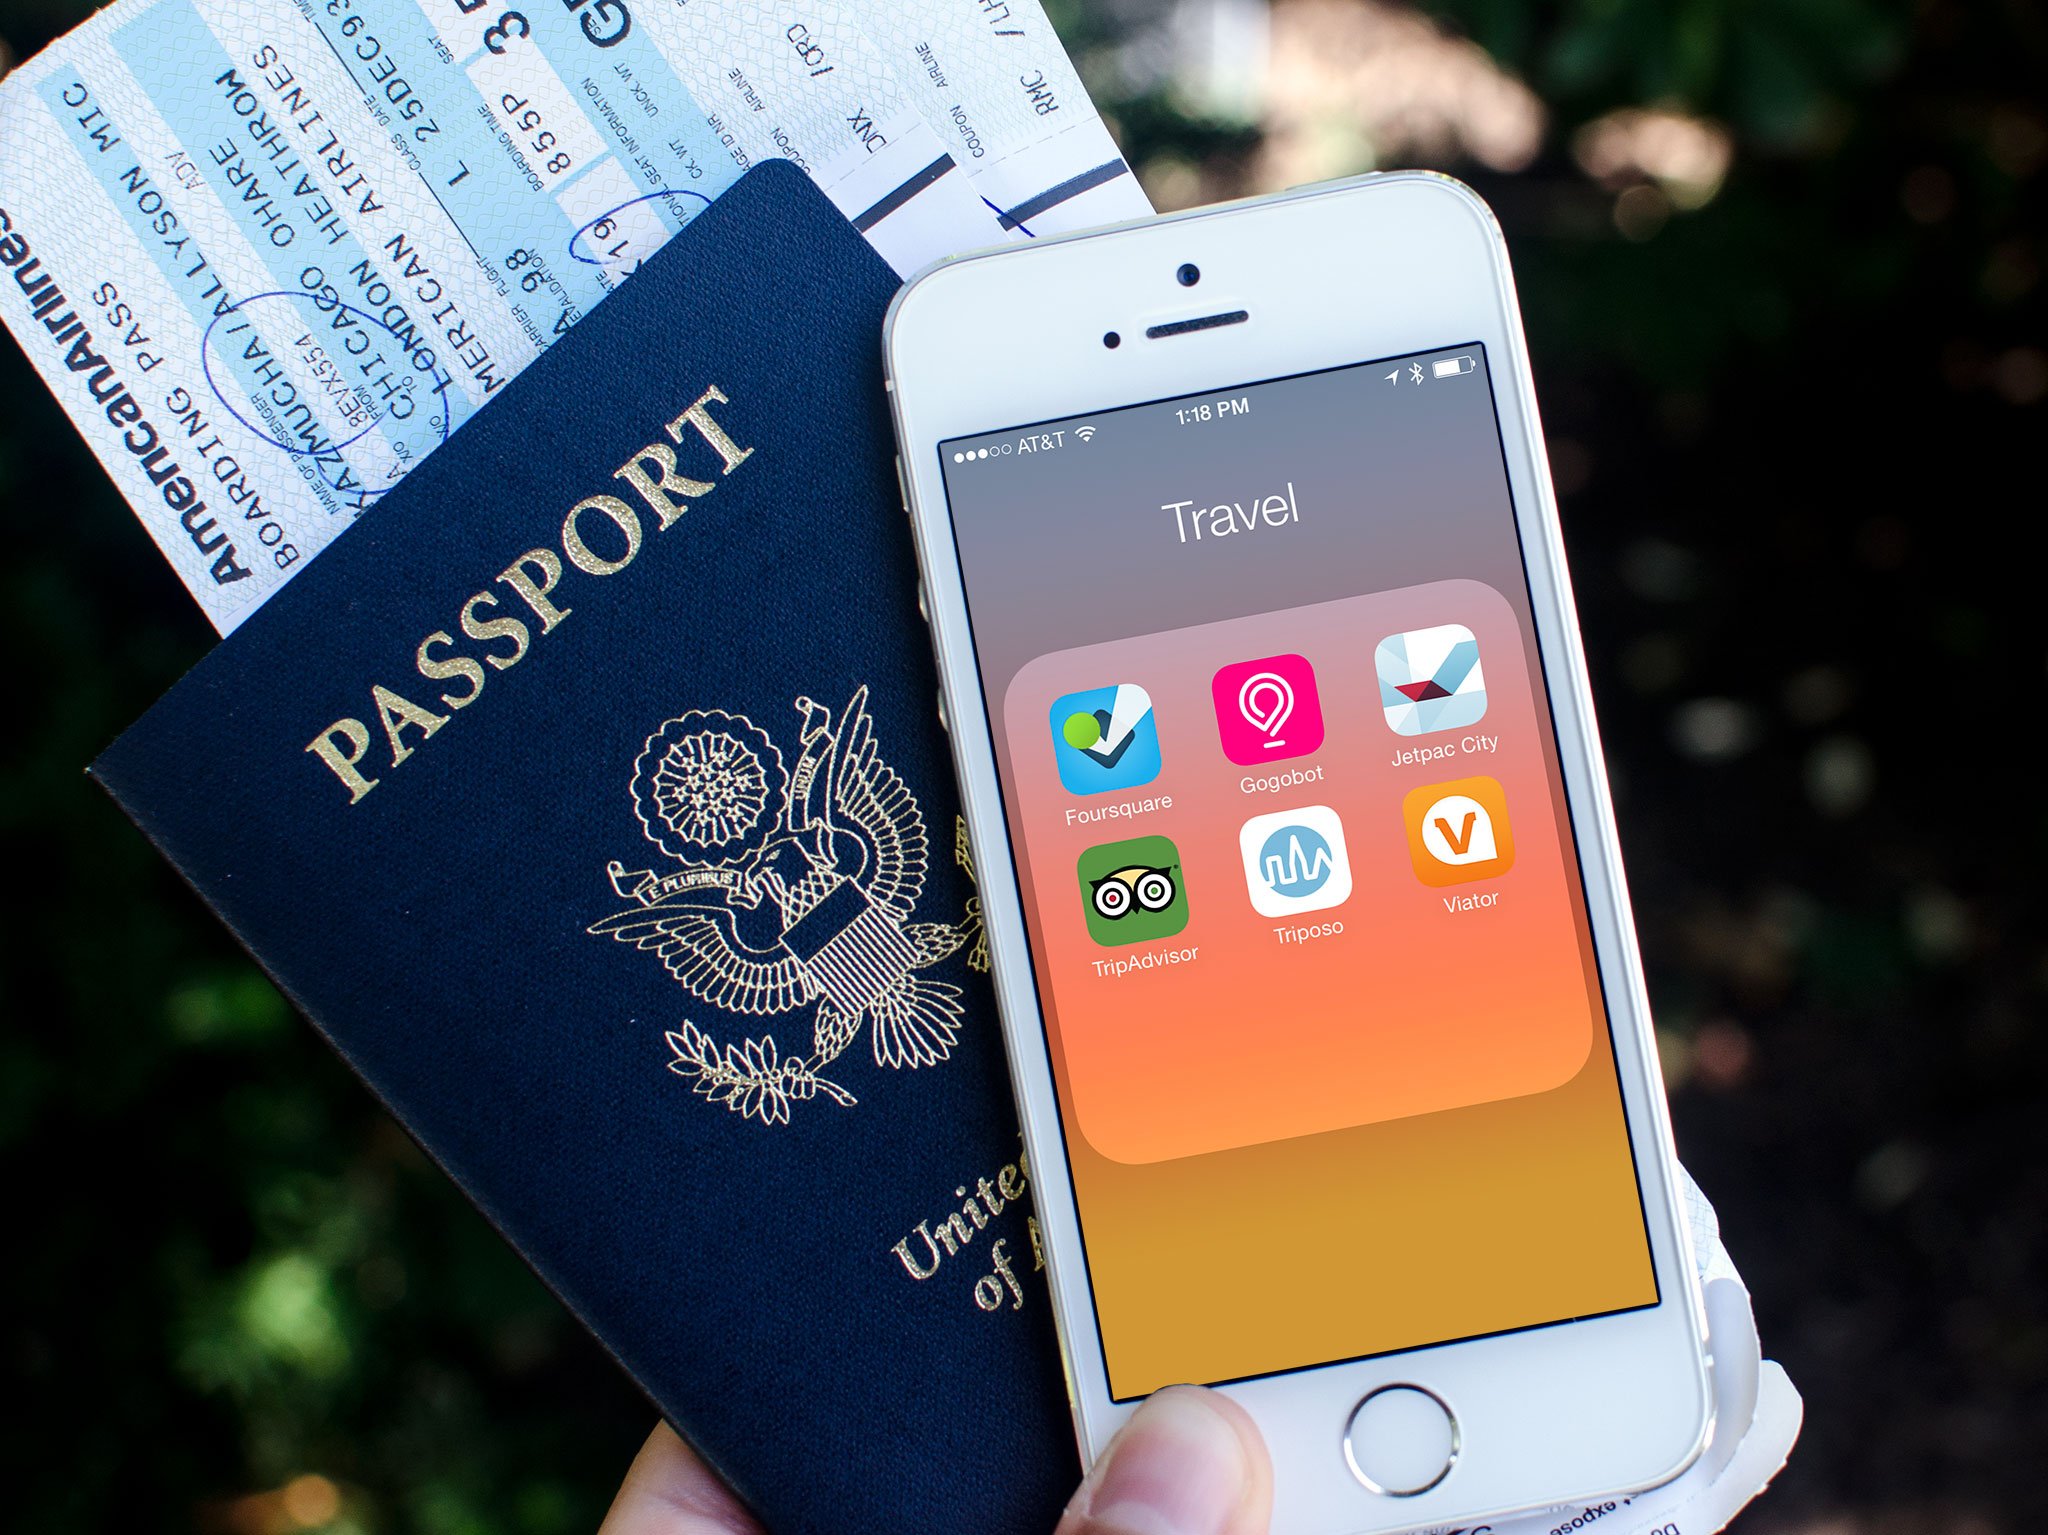 travel_guide_apps_iphone_5s_passport_hero.jpg